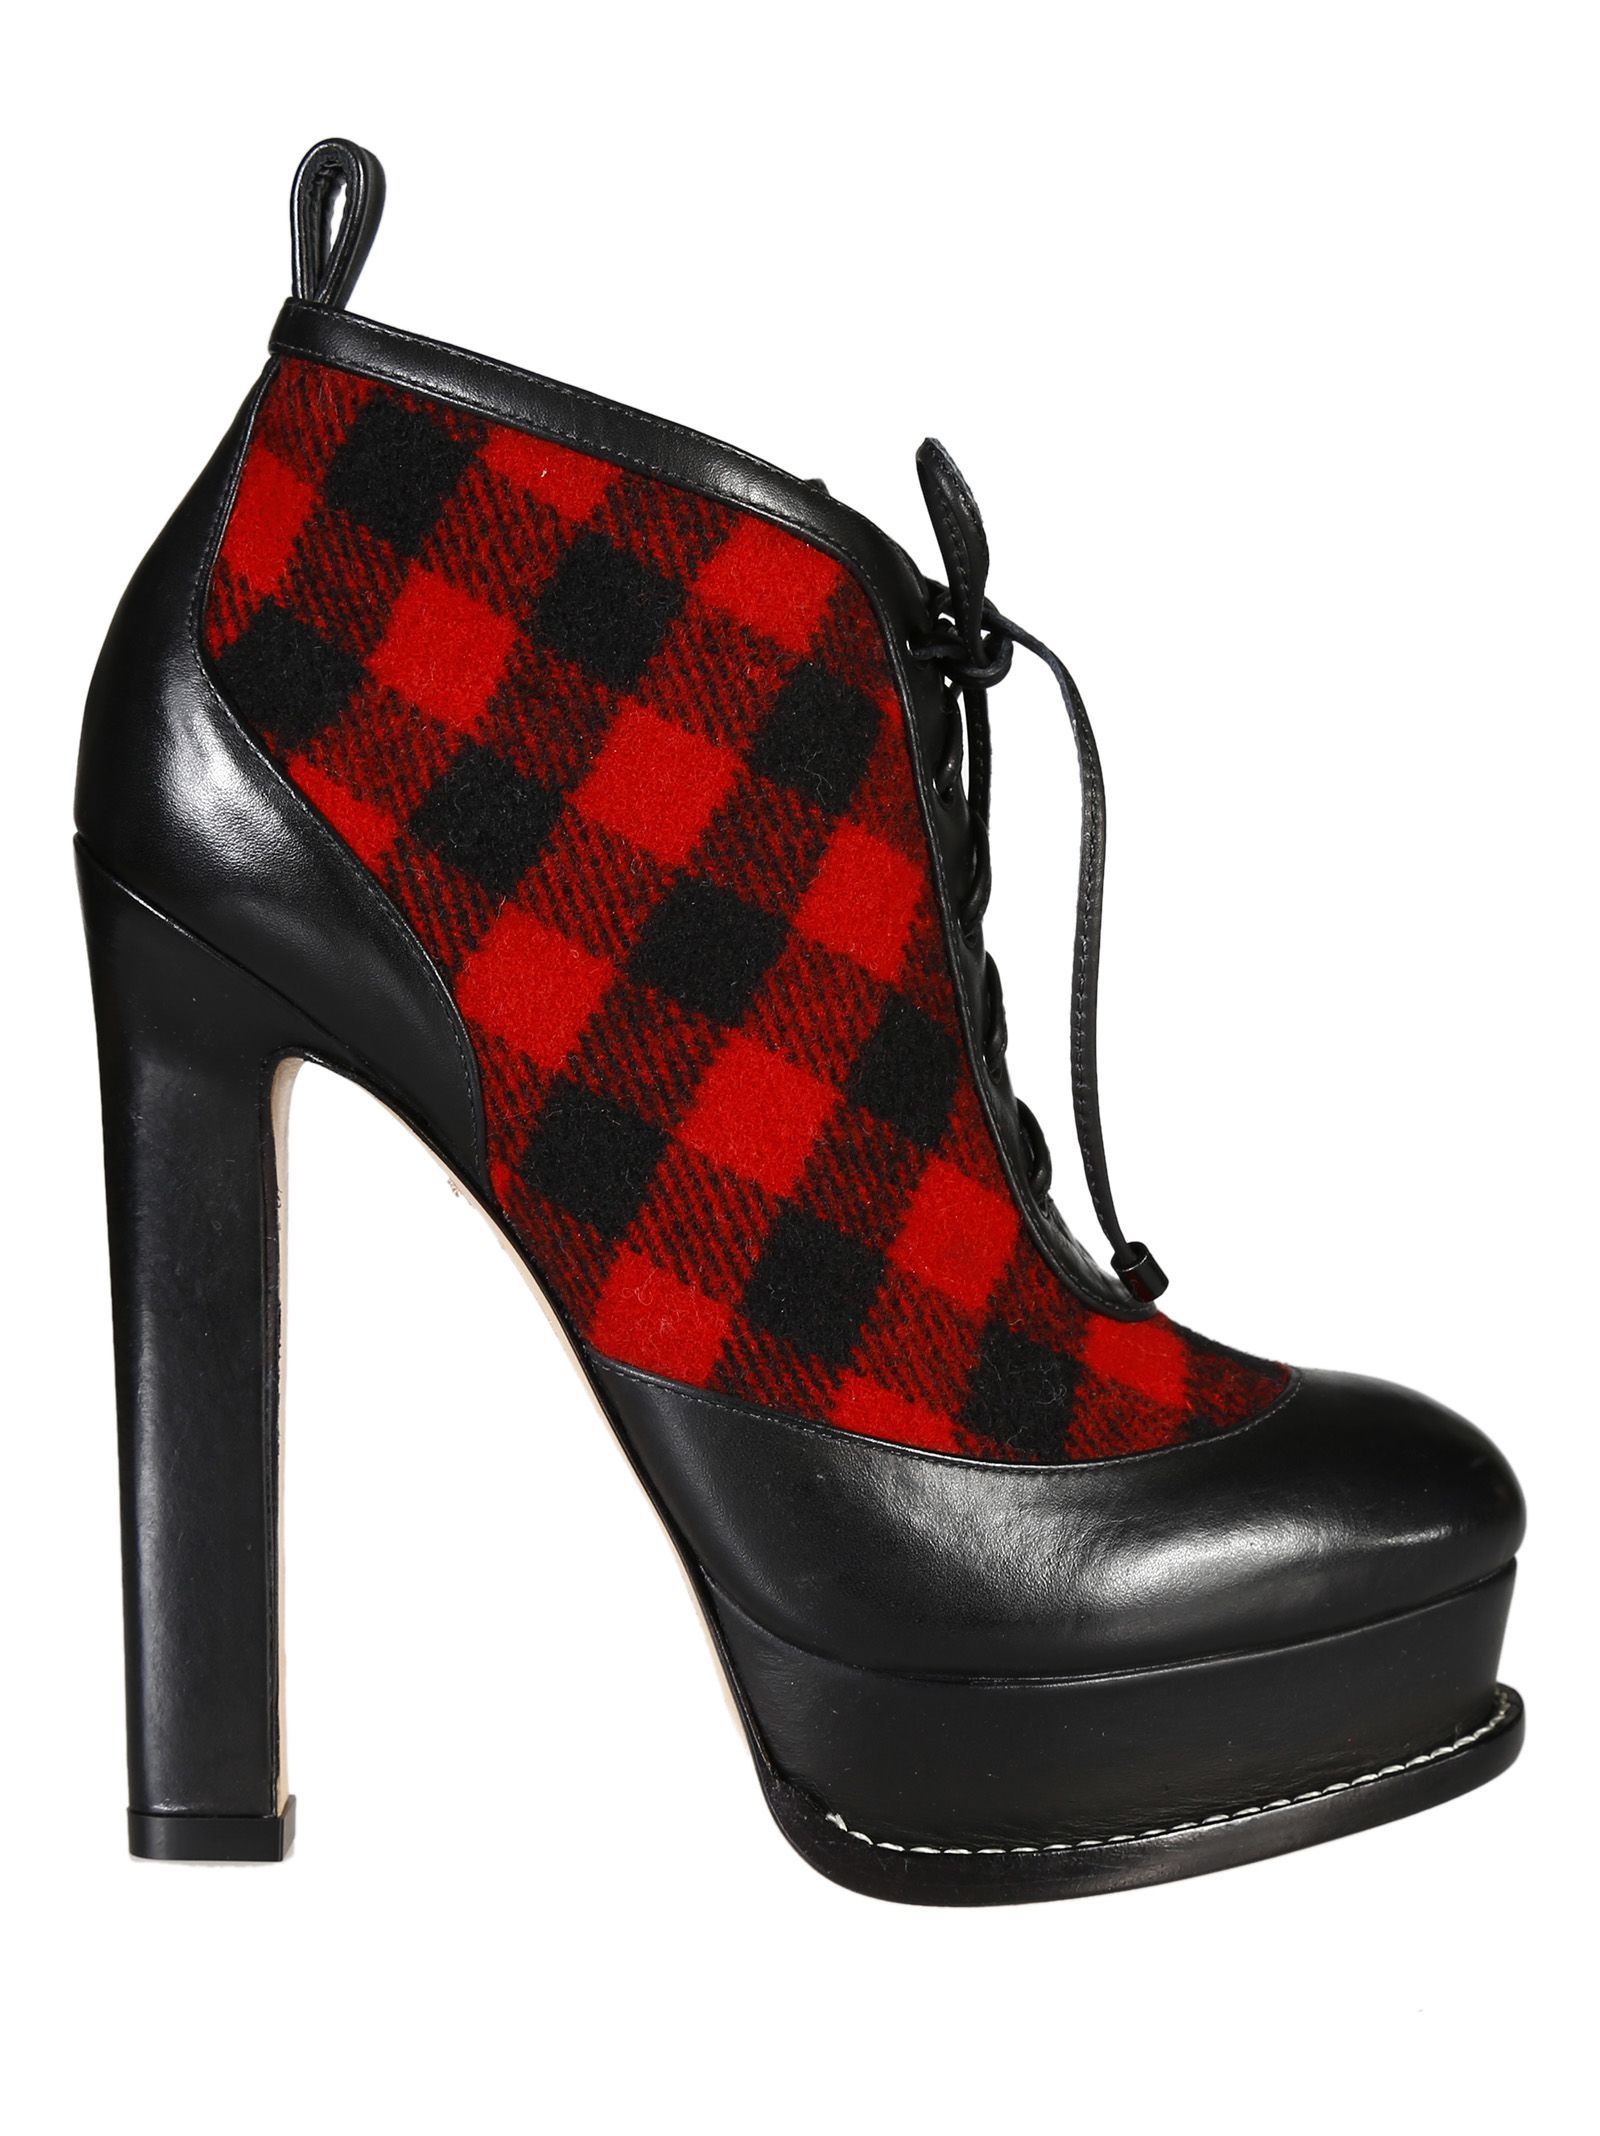 Sophia Webster - Sophia Webster Katy Check Boots - Black/Red, Women's ...